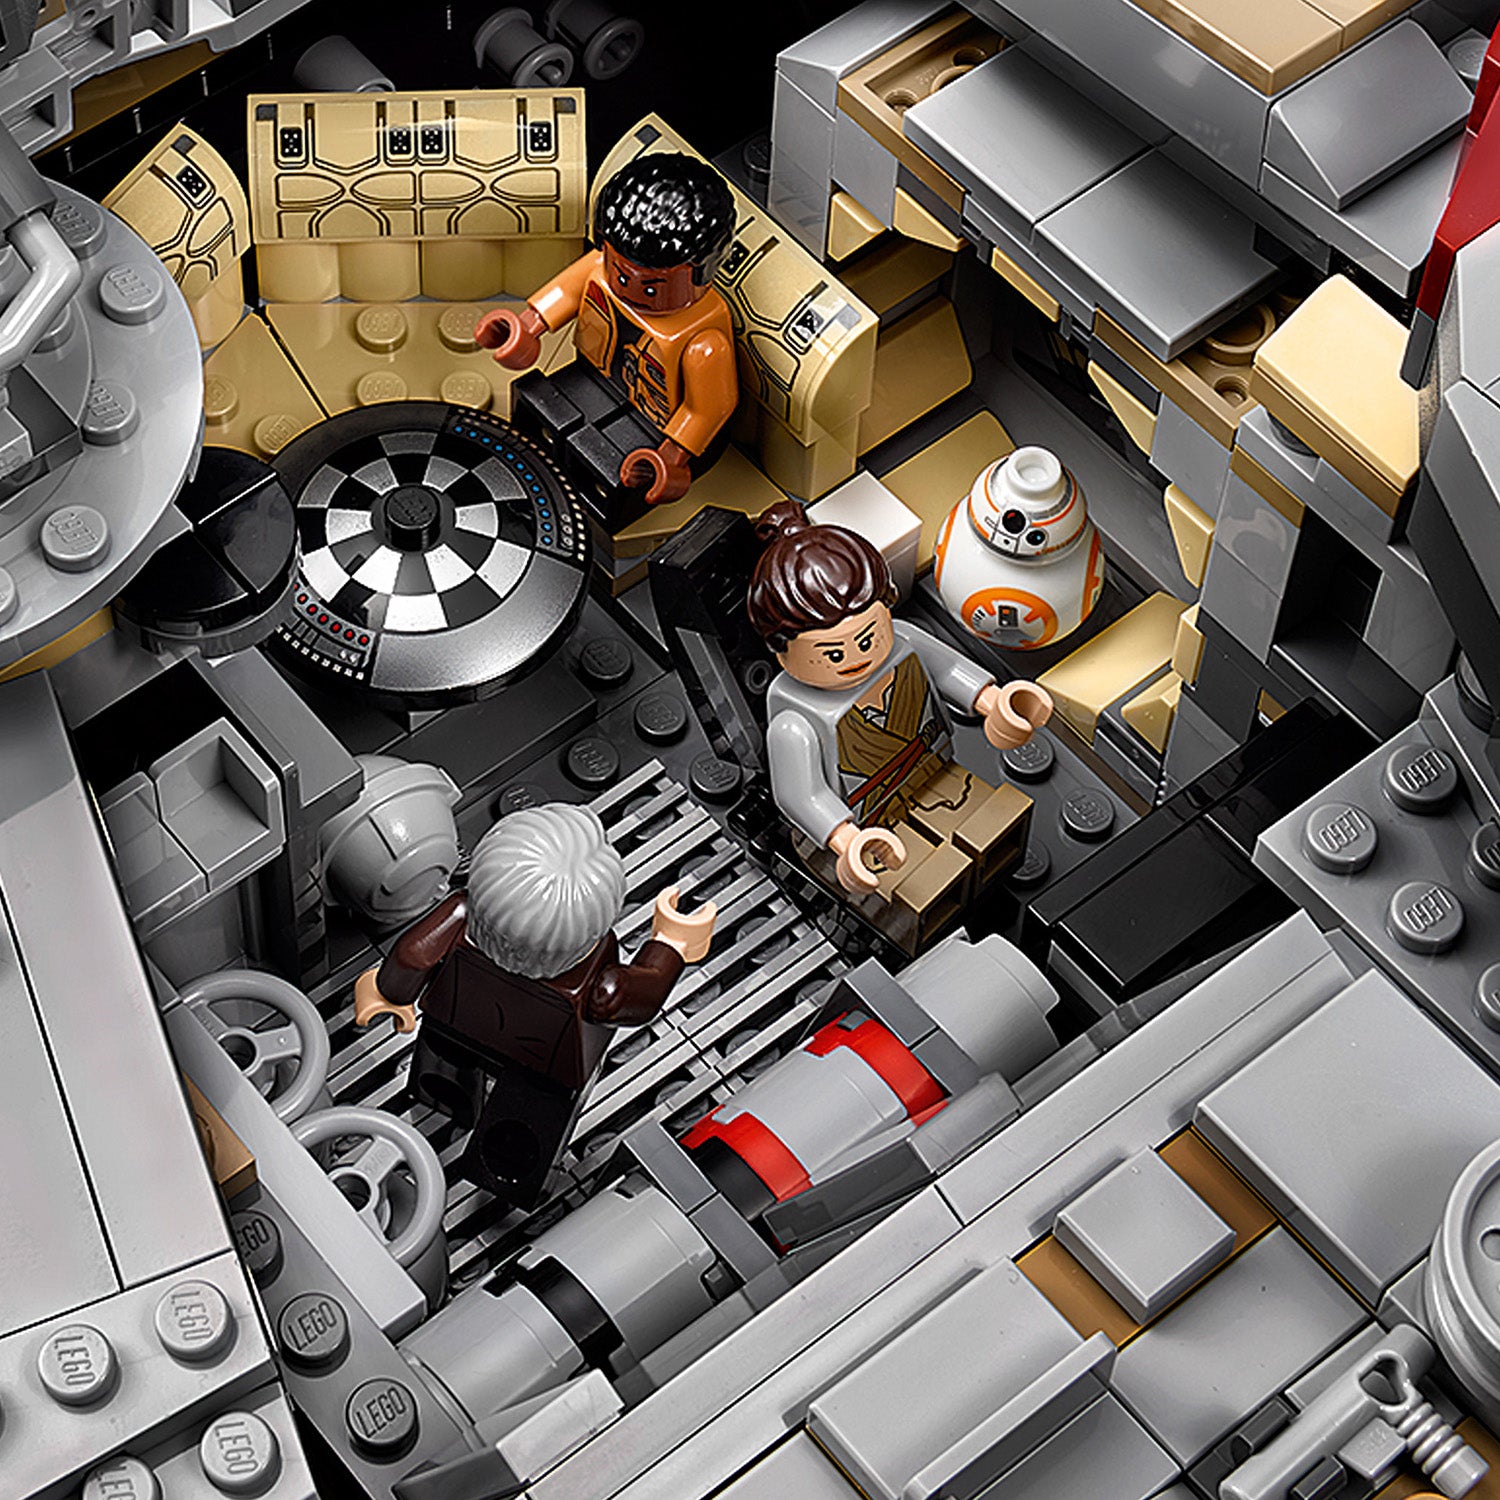 LEGO Star Wars Millennium Falcon Collector Series Set 75192 –